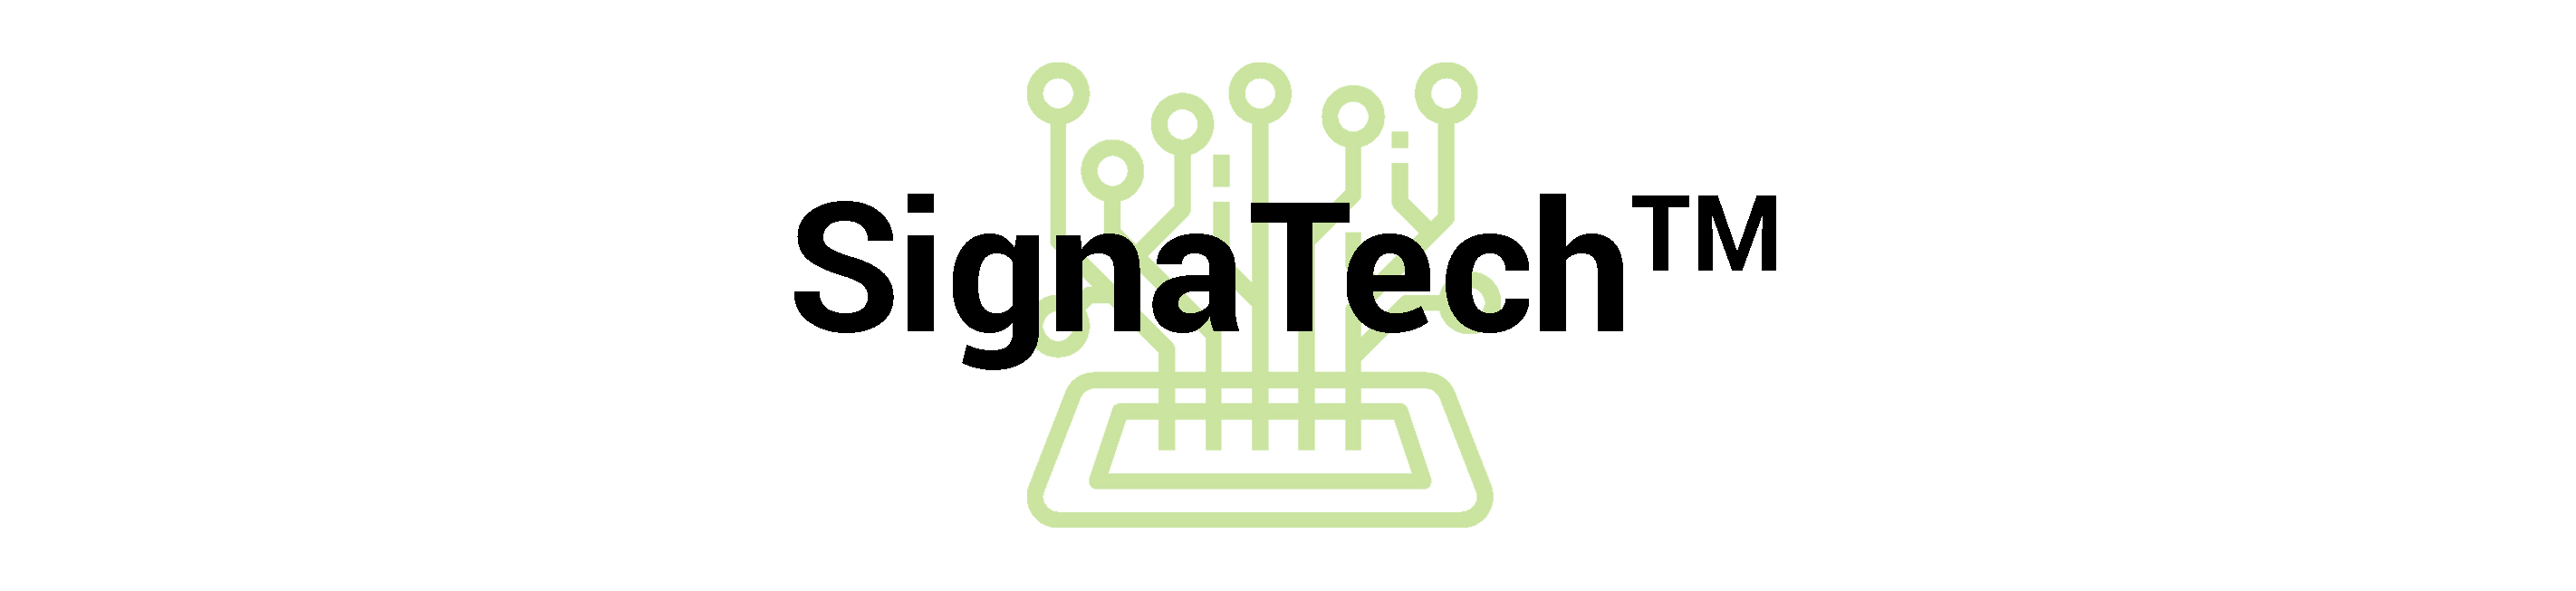 SignaTech Header